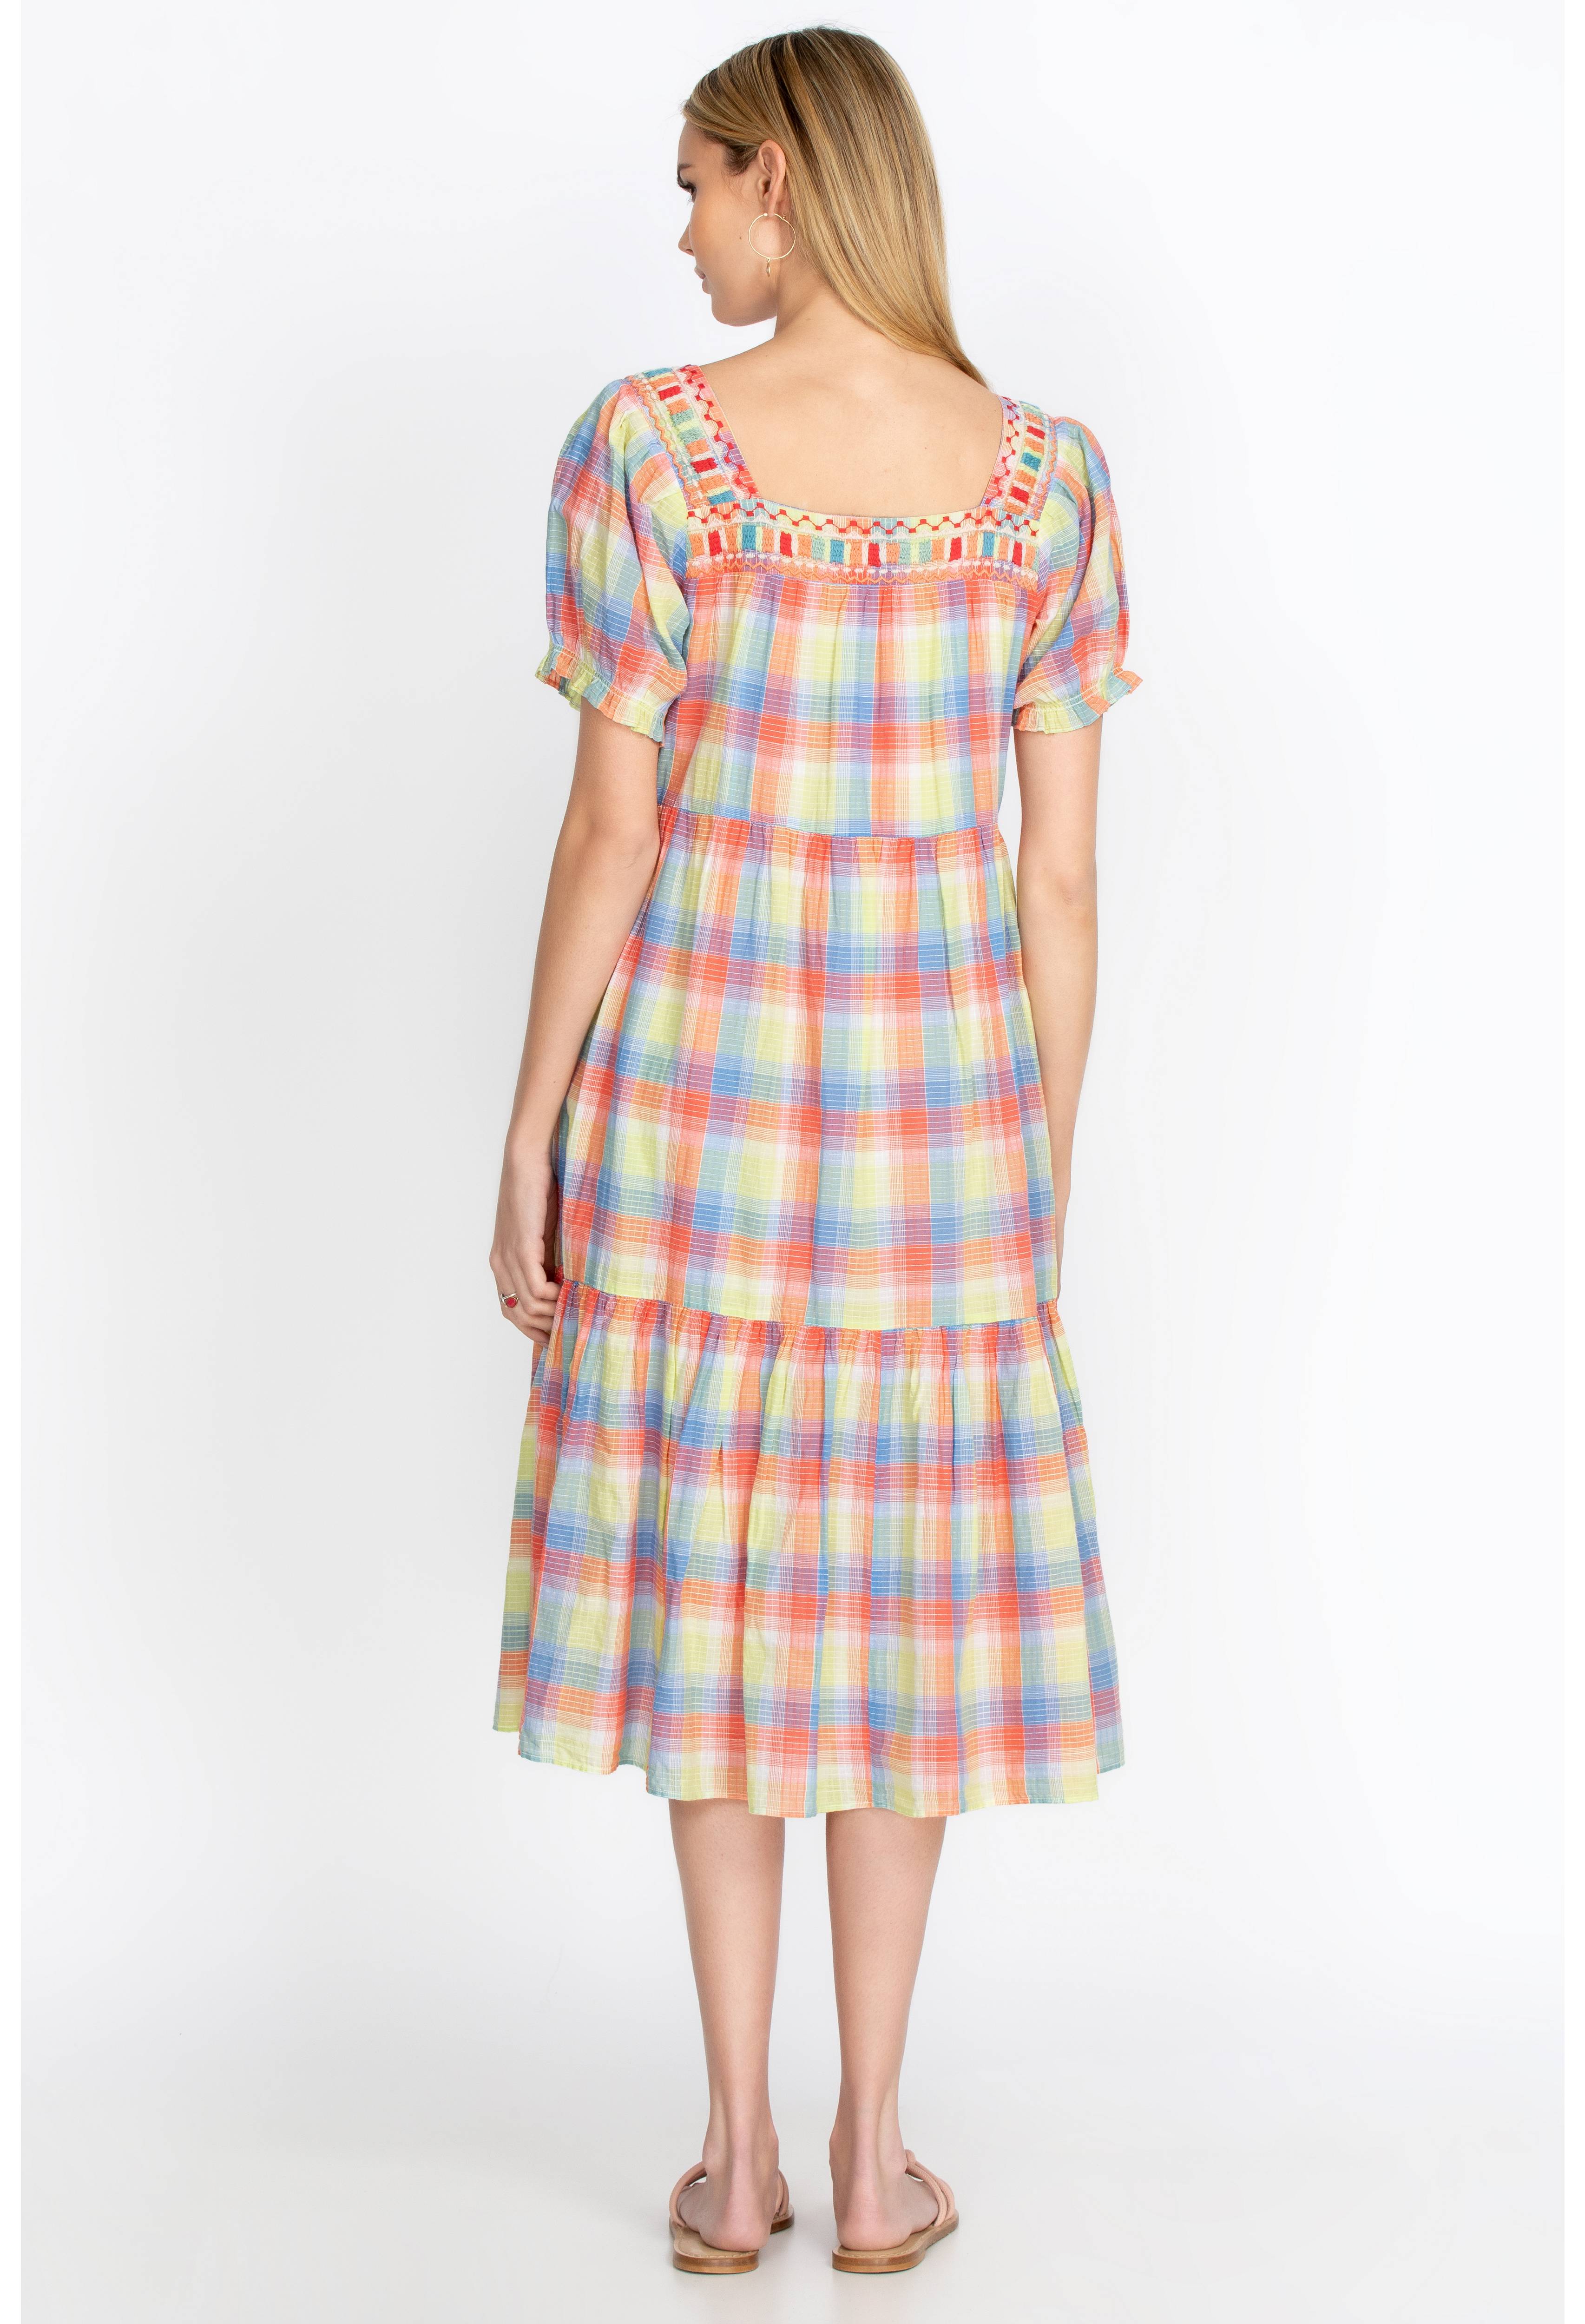 Delacey Plaid Square Neck Midi Dress, , large image number 3